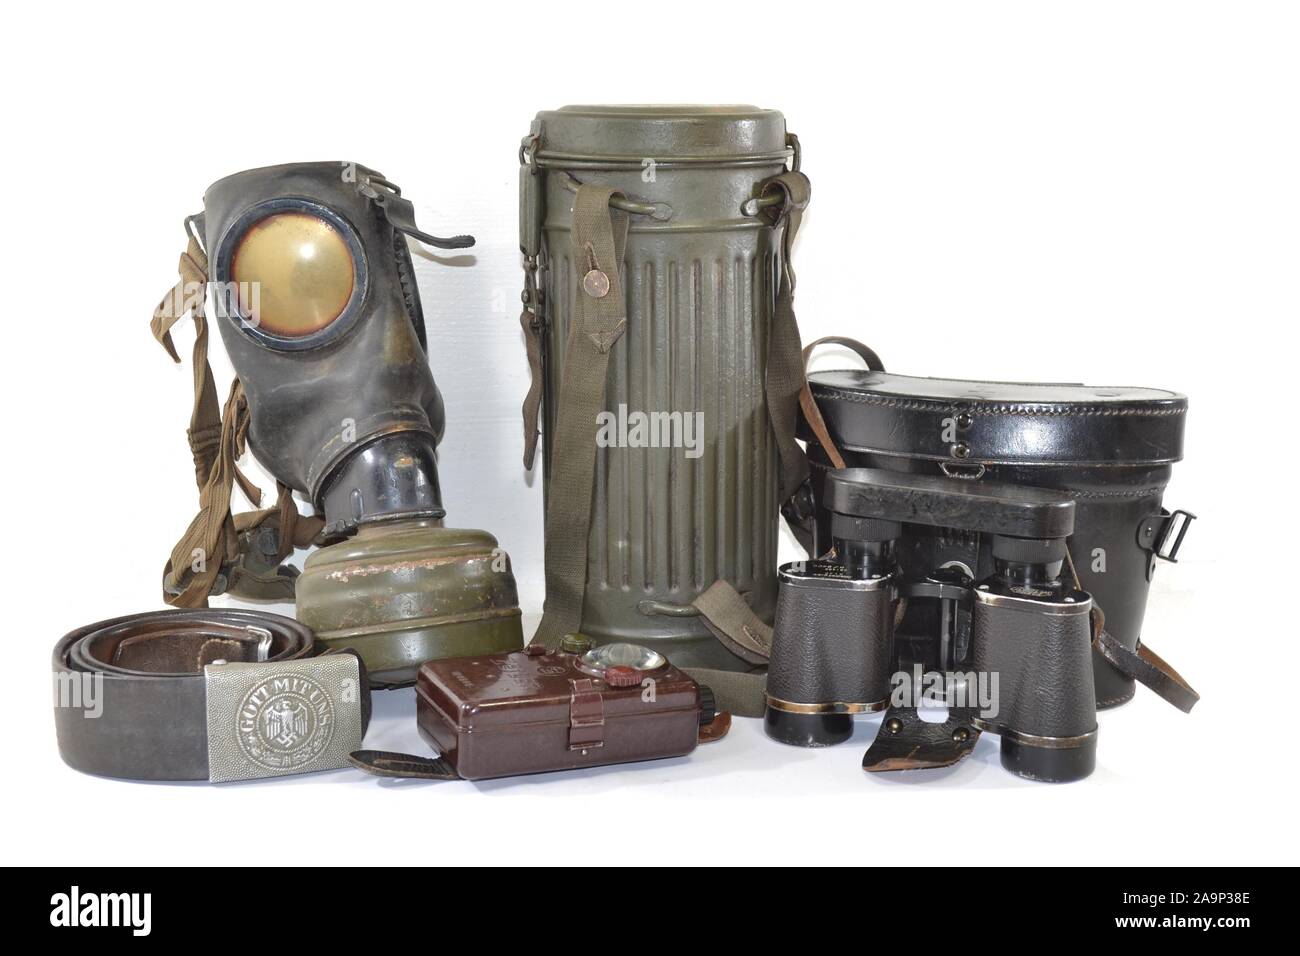 German equipment WW2 gase mask binoculars belt buckle light Stock Photo